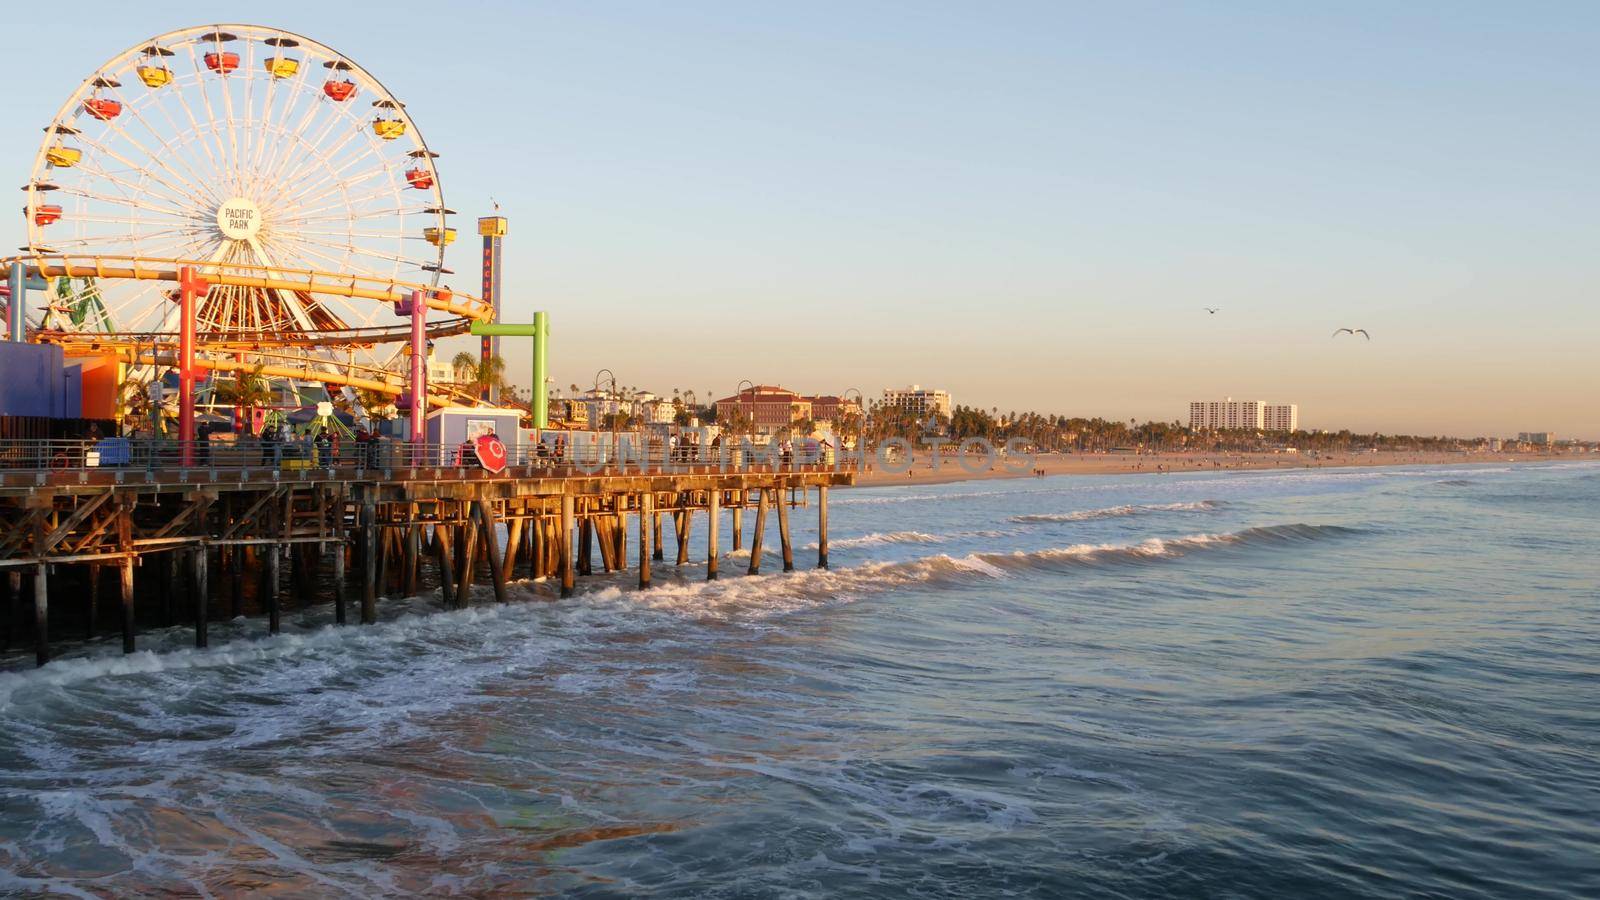 SANTA MONICA, LOS ANGELES CA USA - 19 DEC 2019: Classic ferris wheel in amusement park on pier. California summertime beach aesthetic, ocean waves in pink sunset. Summertime iconic symbol by DogoraSun